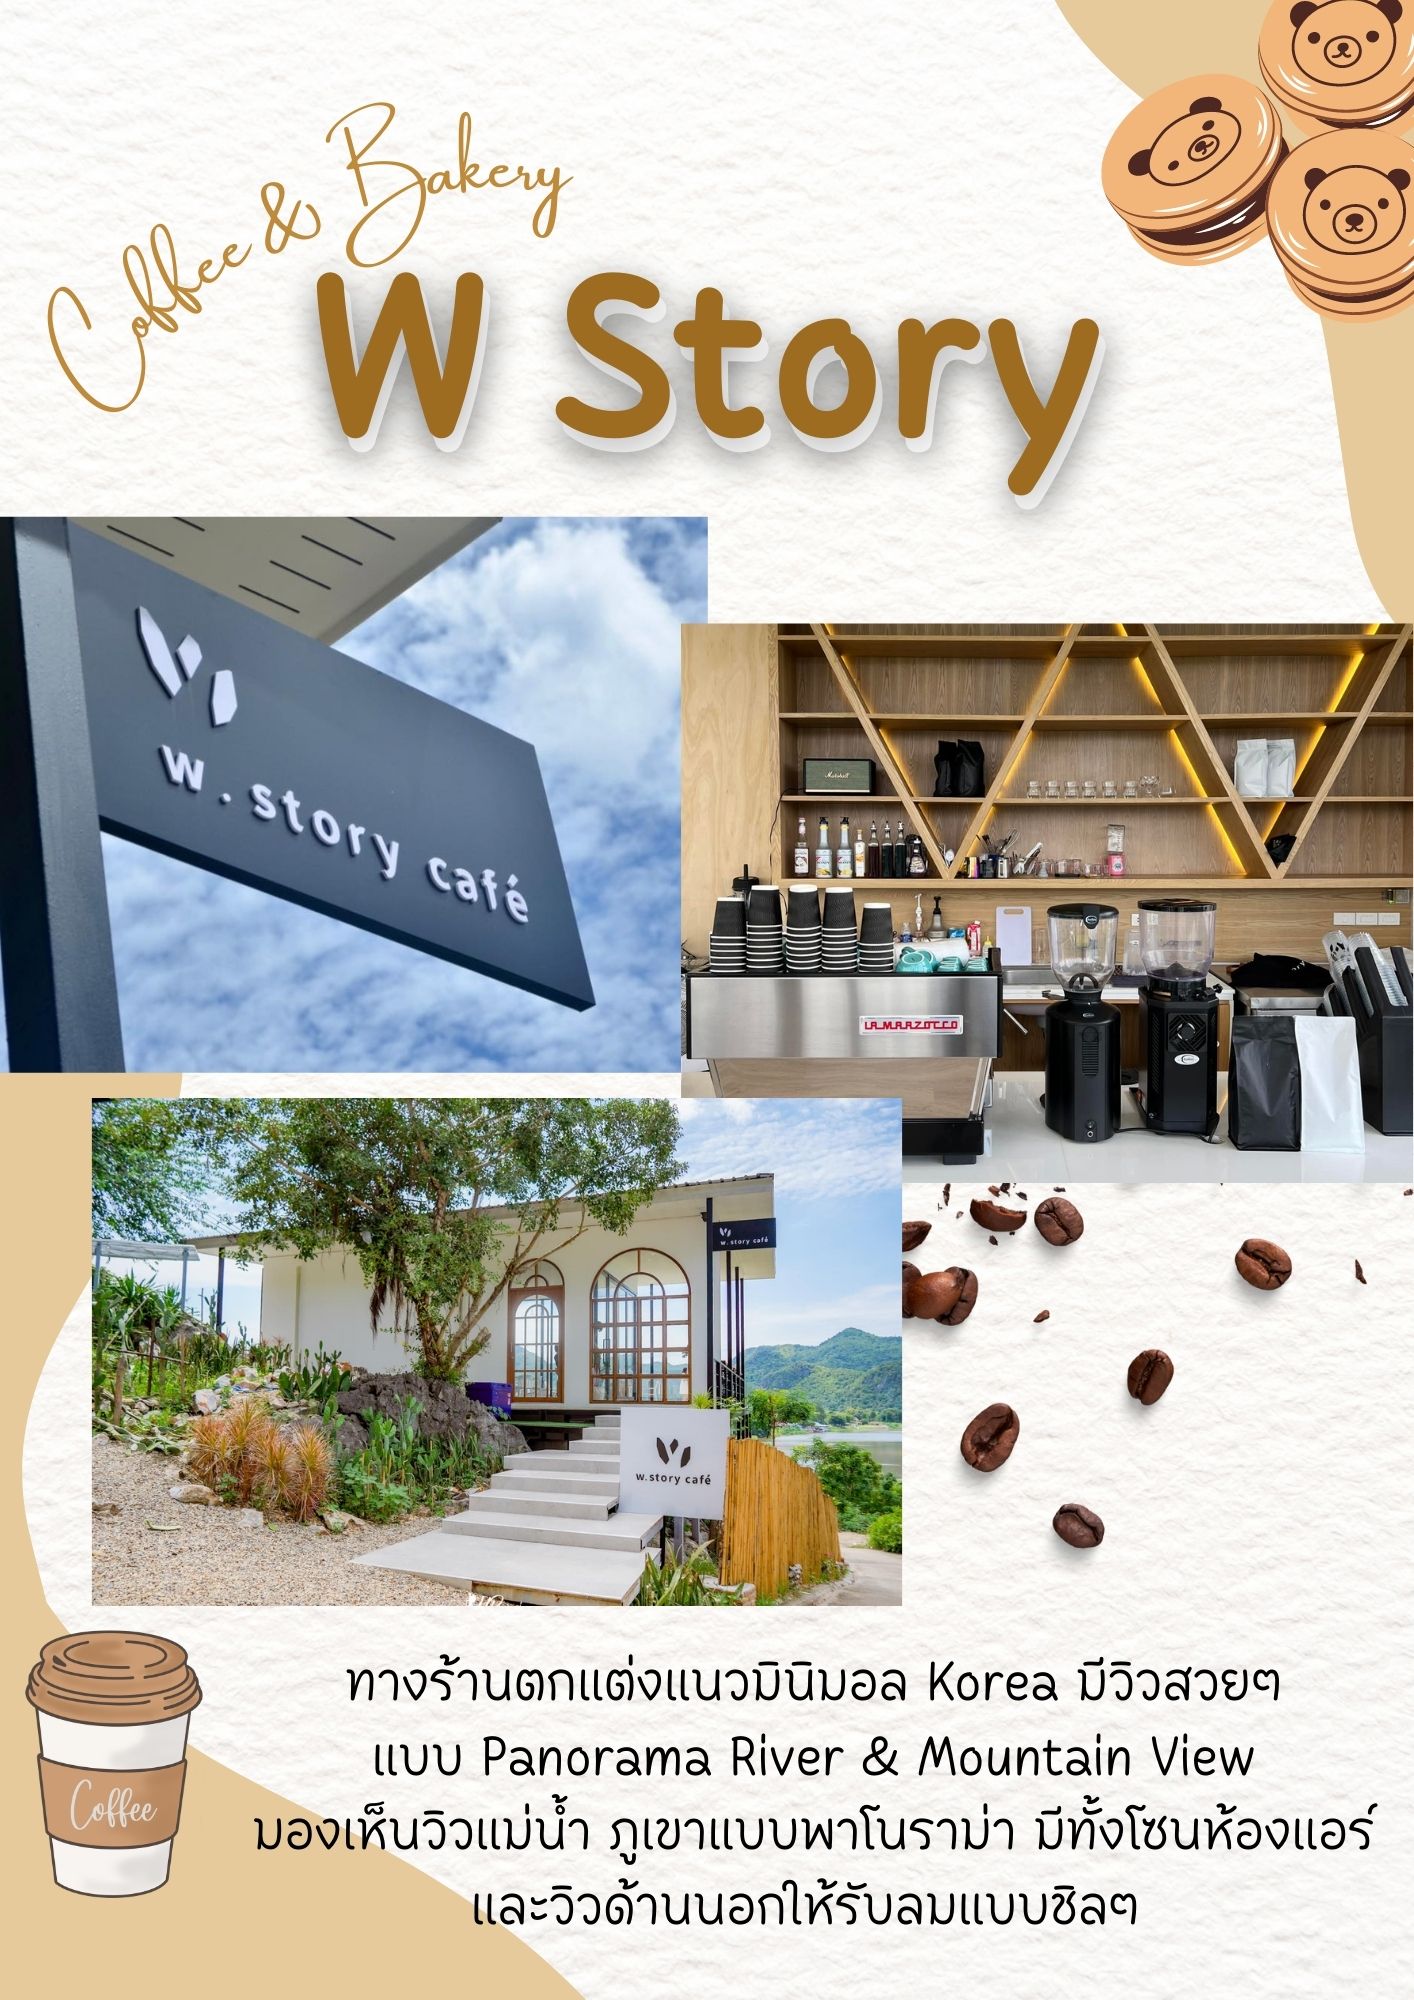 W Story Coffee & Bakery at Kanchanaburi